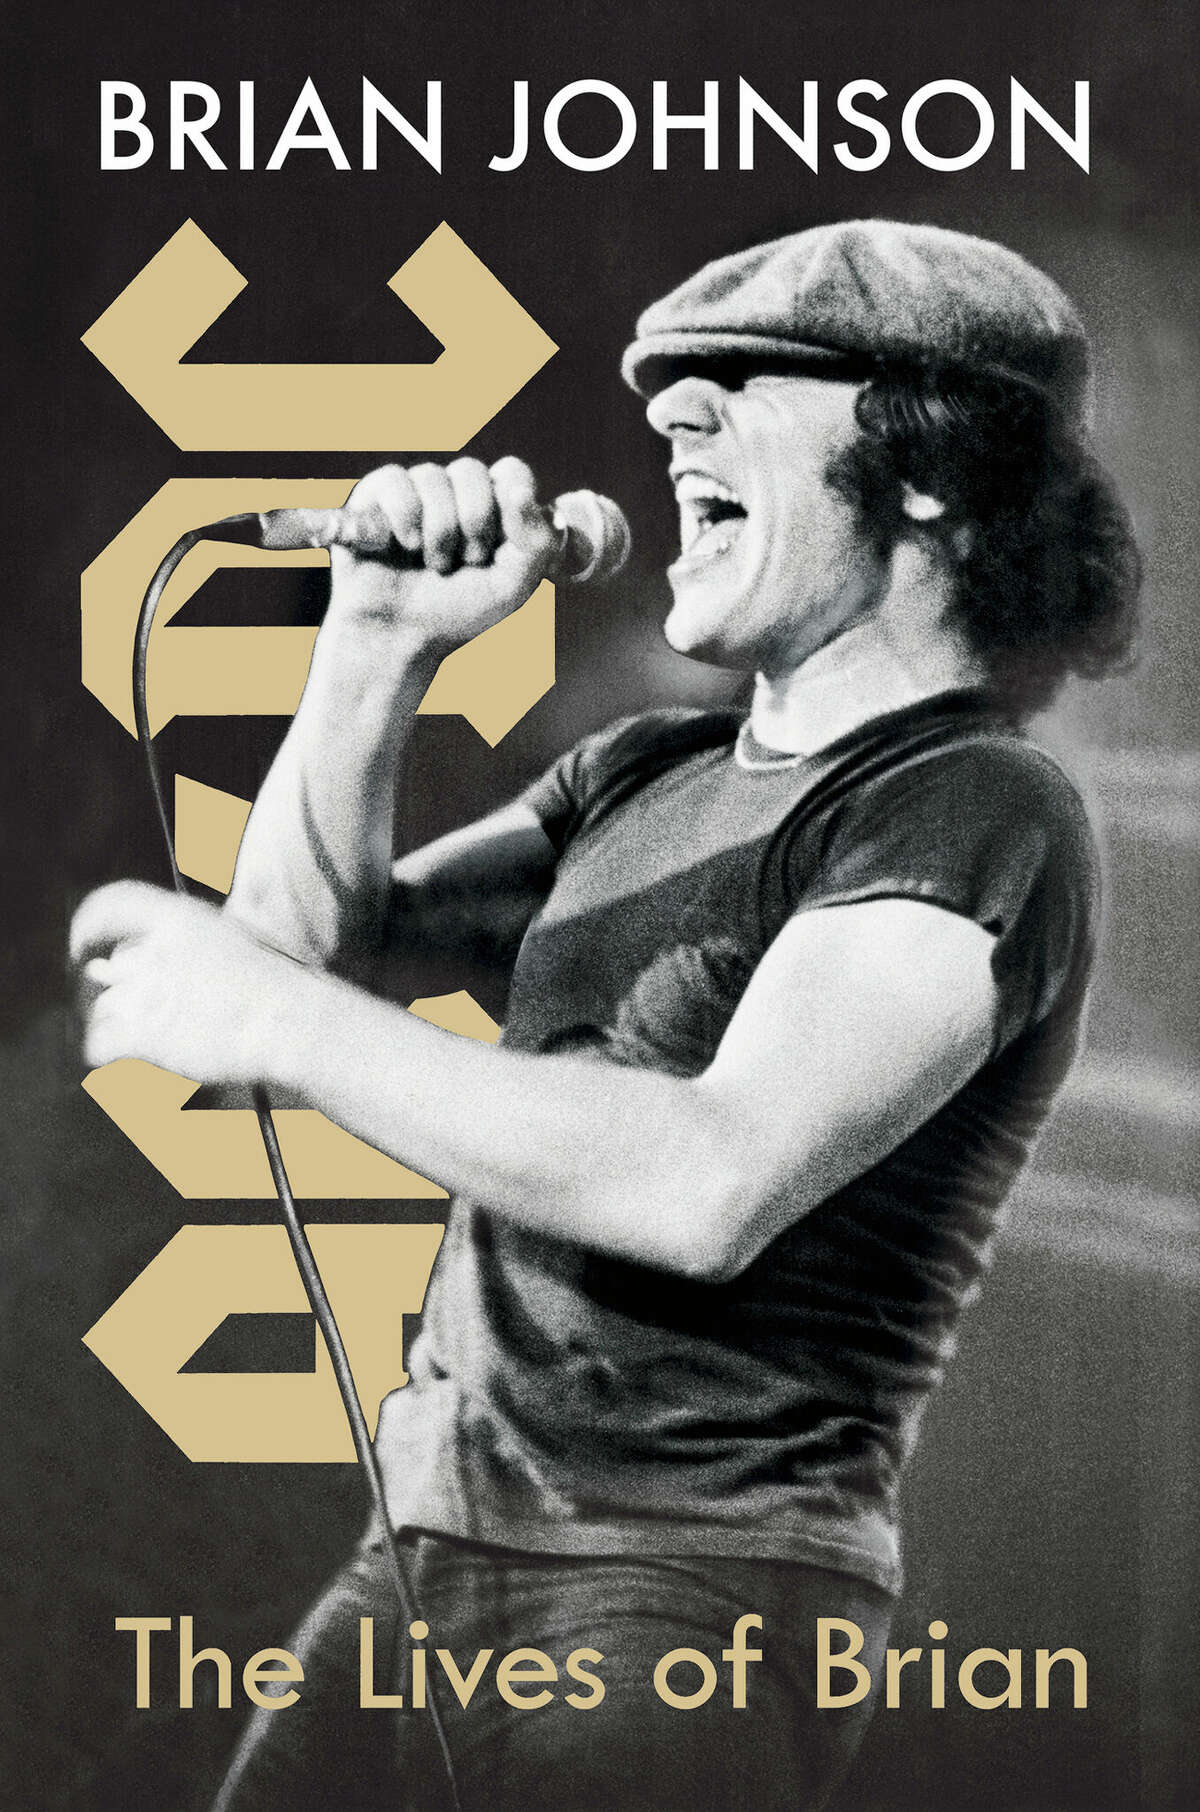 "The Lives of Brian" is AC/DC lead singer Brian Johnson's new memoir.